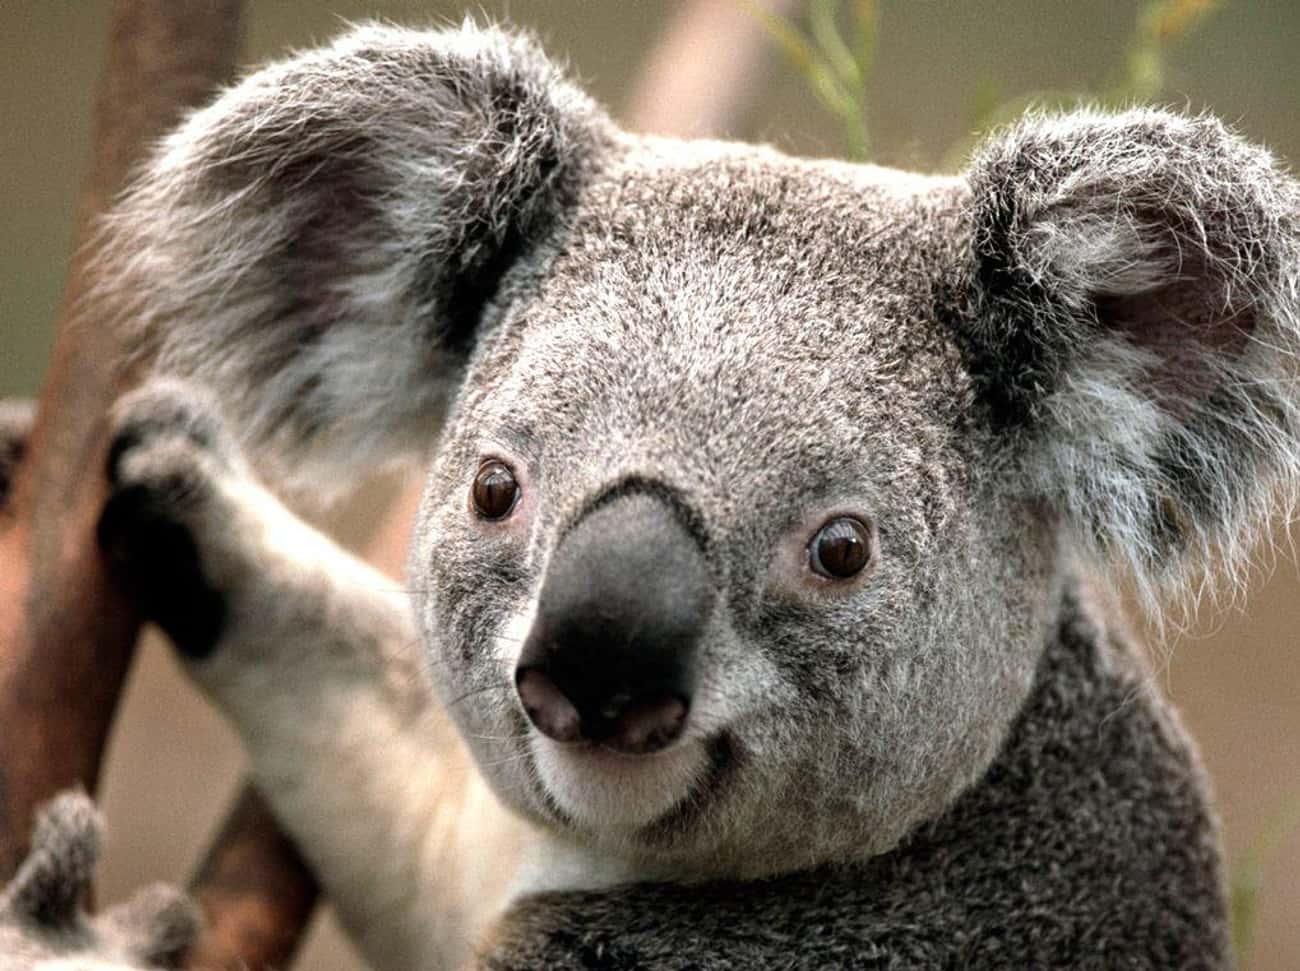 Male Koalas Bite Their Female Mates